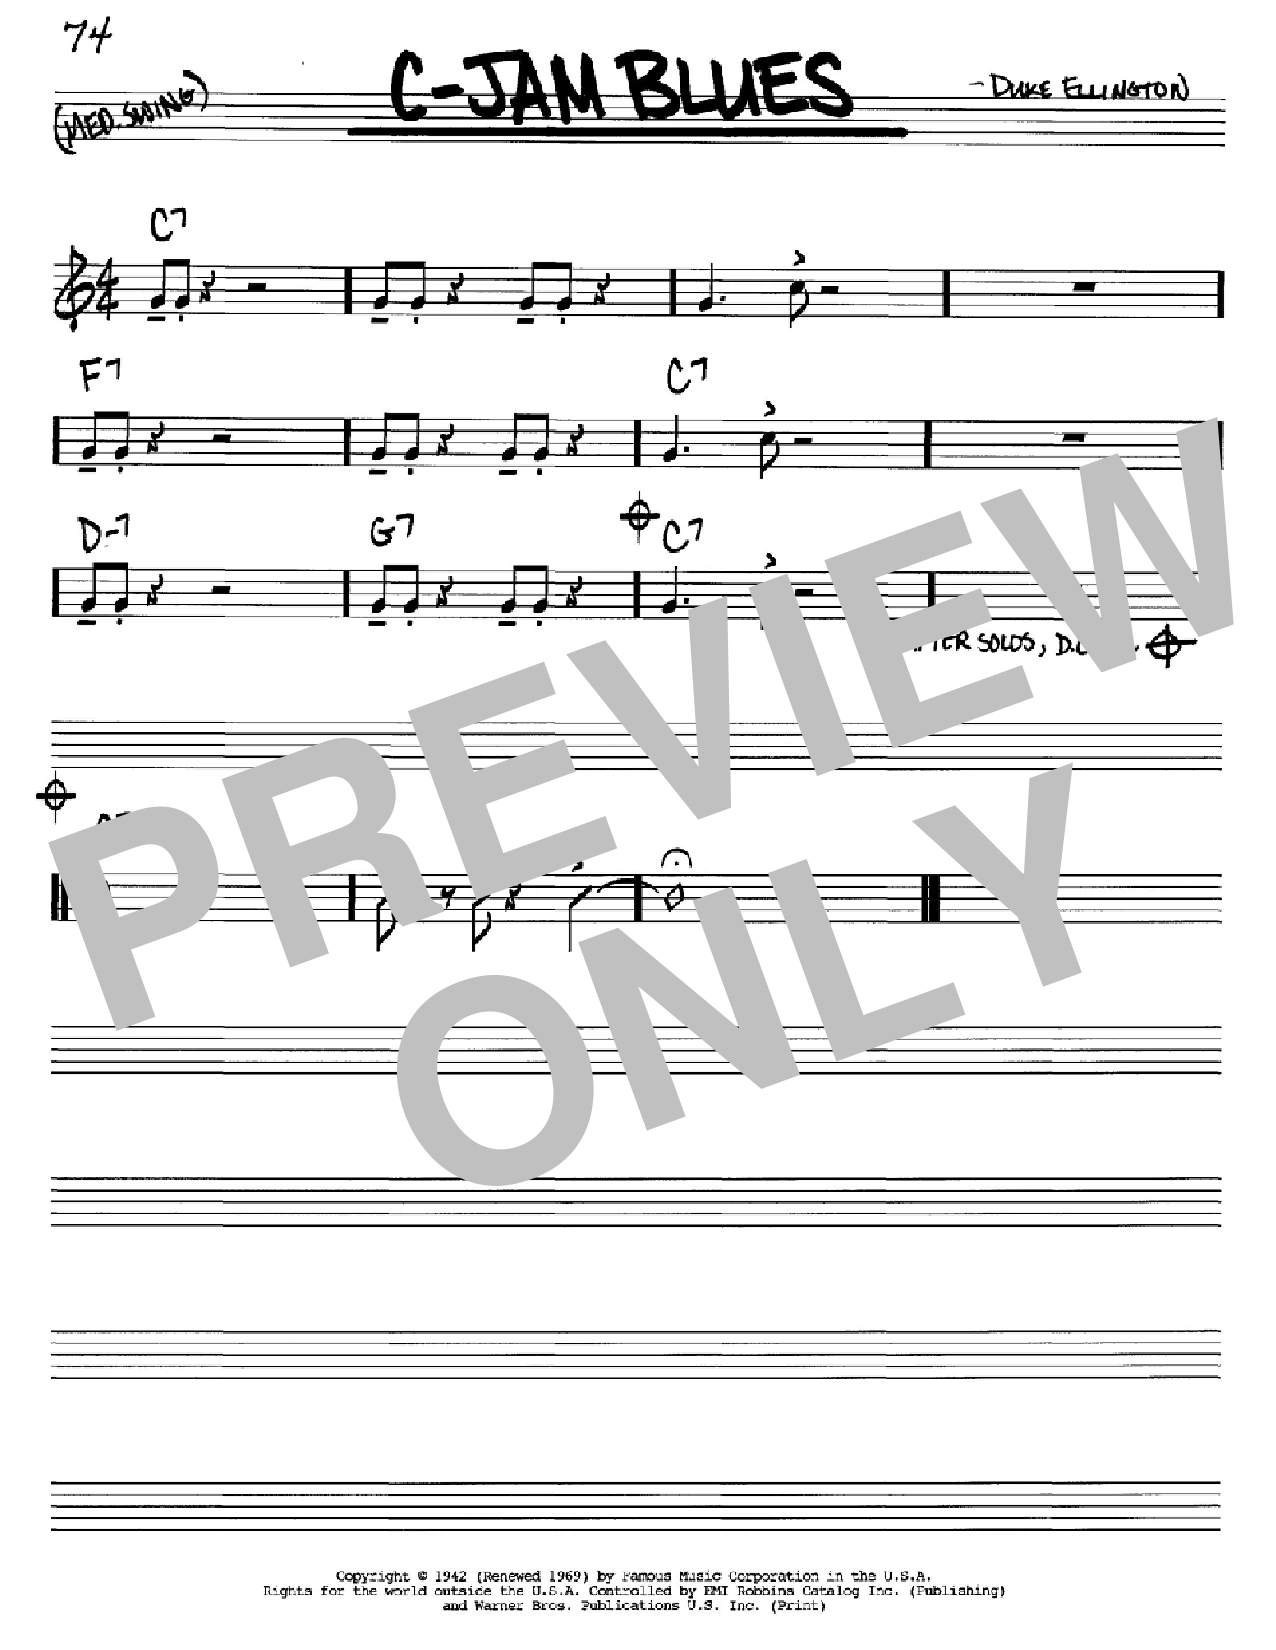 Duke Ellington C-Jam Blues sheet music notes and chords arranged for Solo Guitar